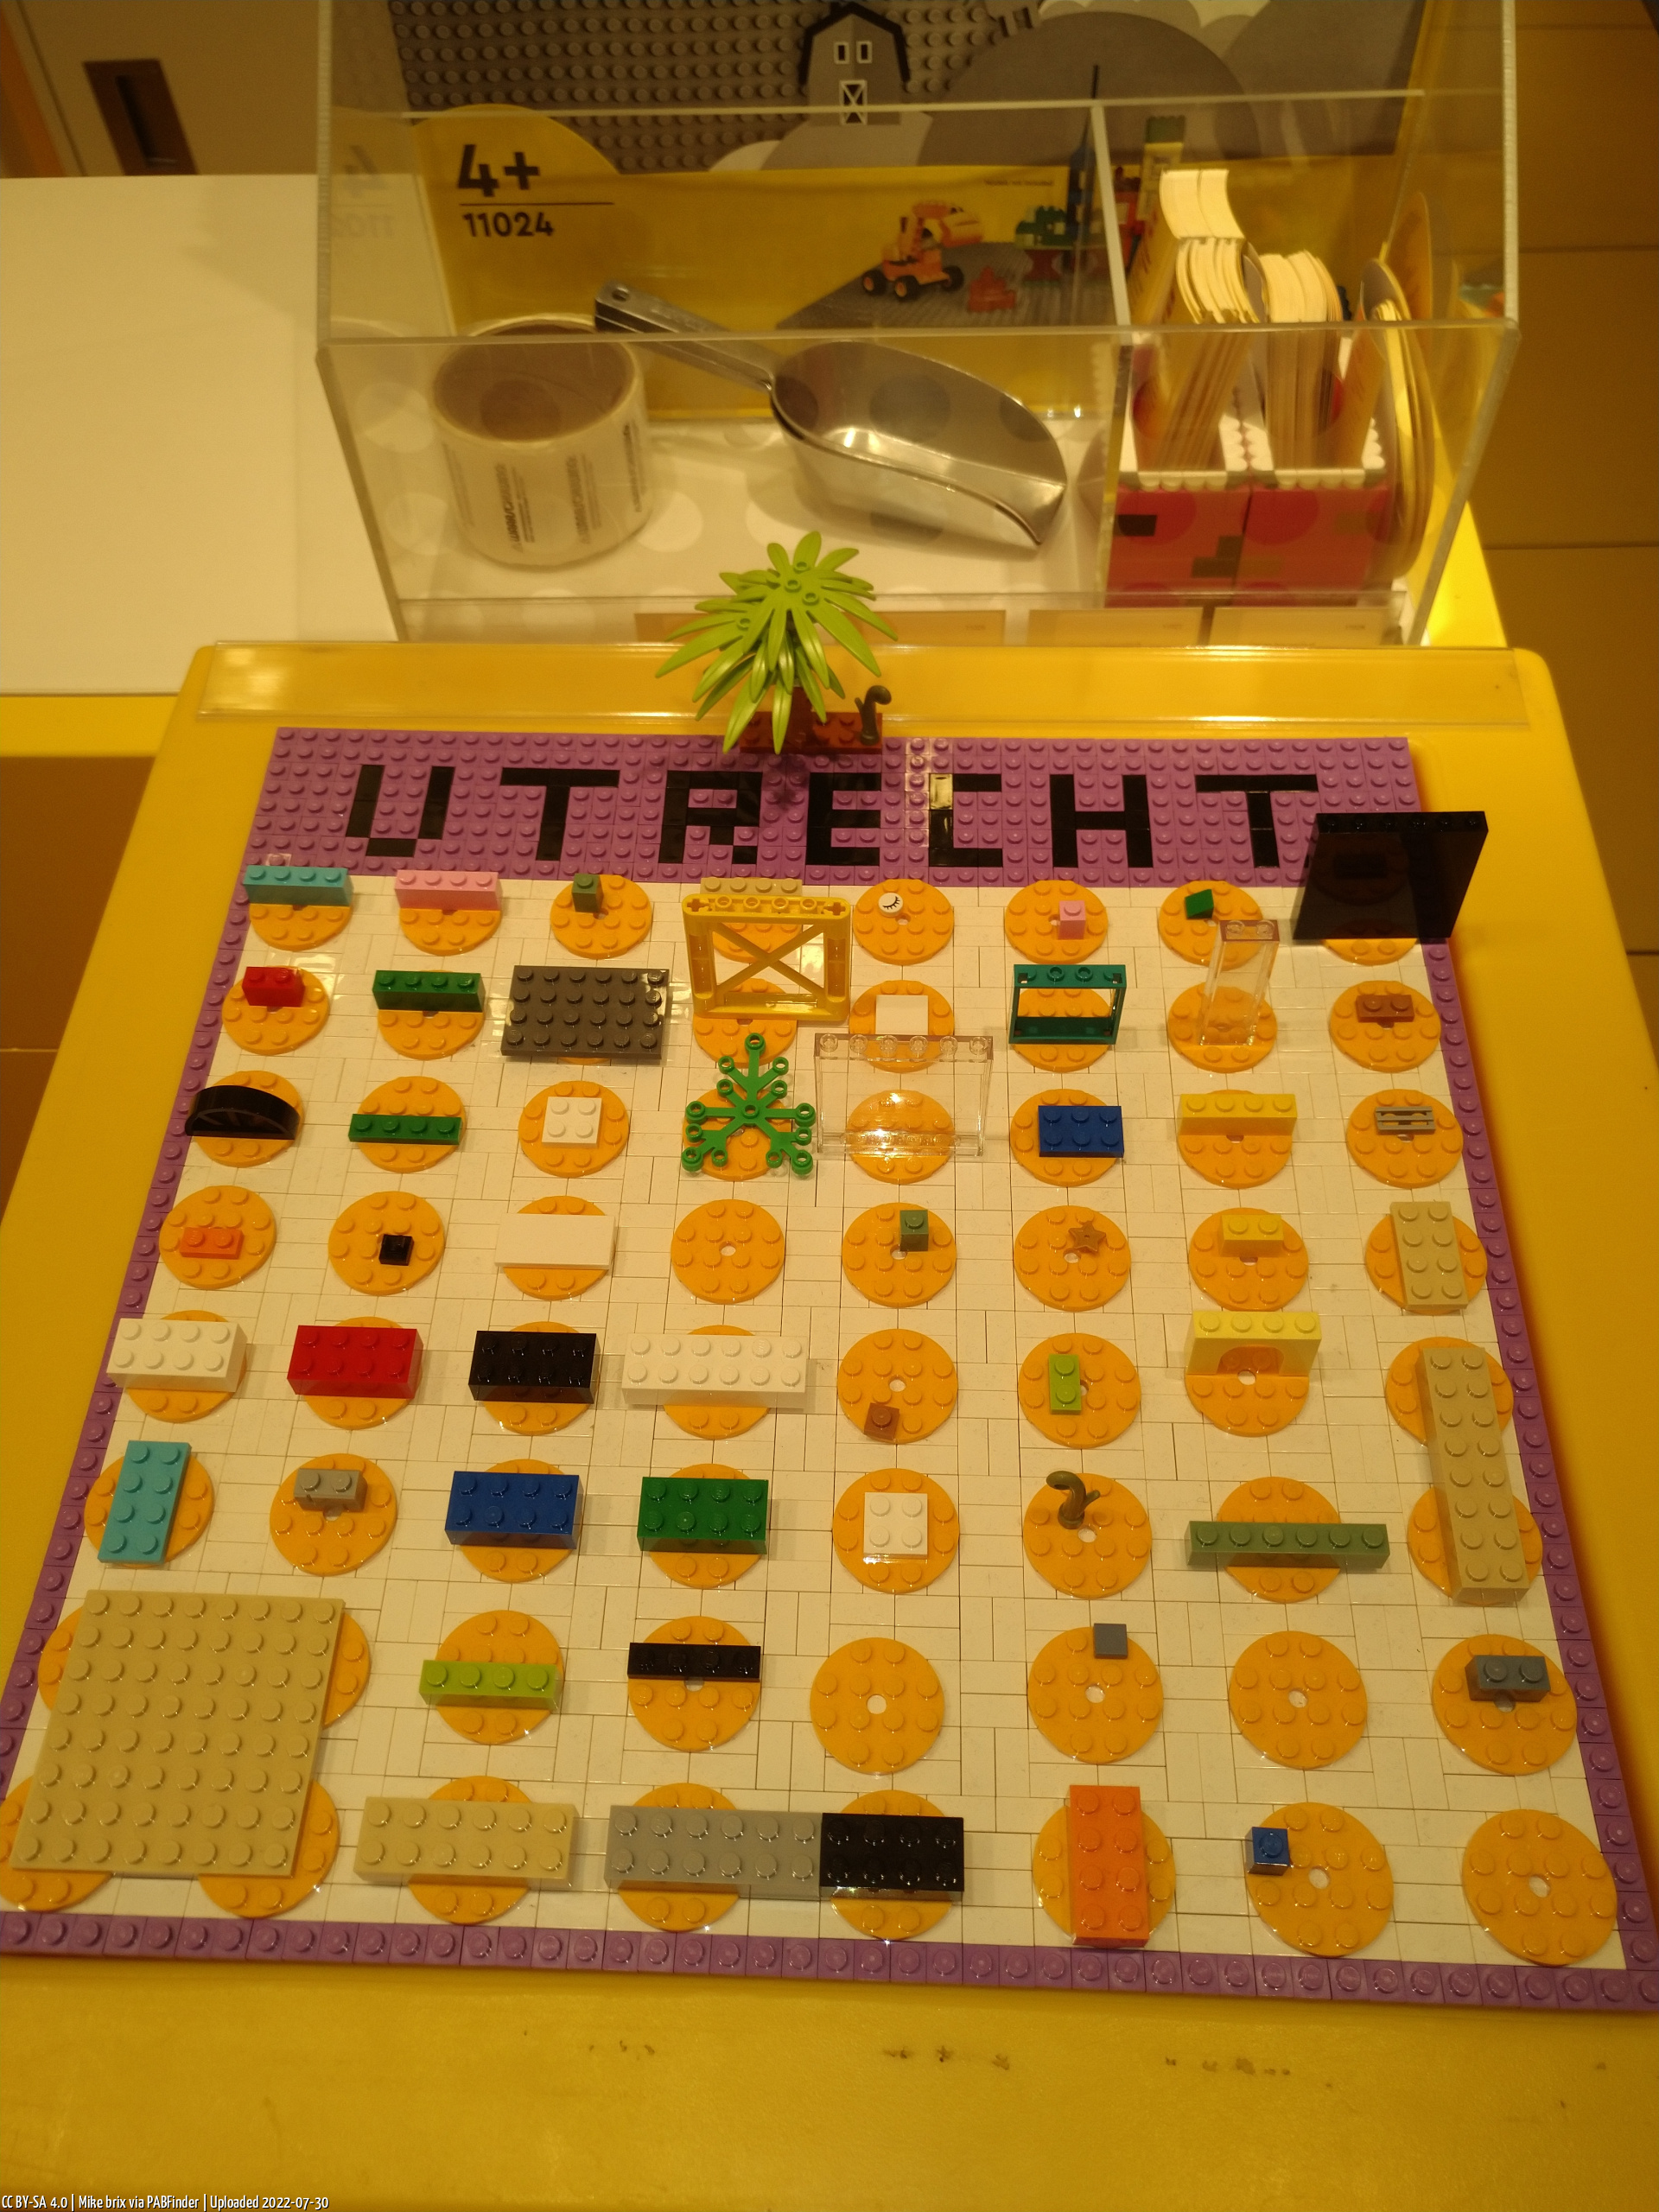 Pick a Brick Utrecht (Mike brix, 7/30/22, 5:07:58 PM)